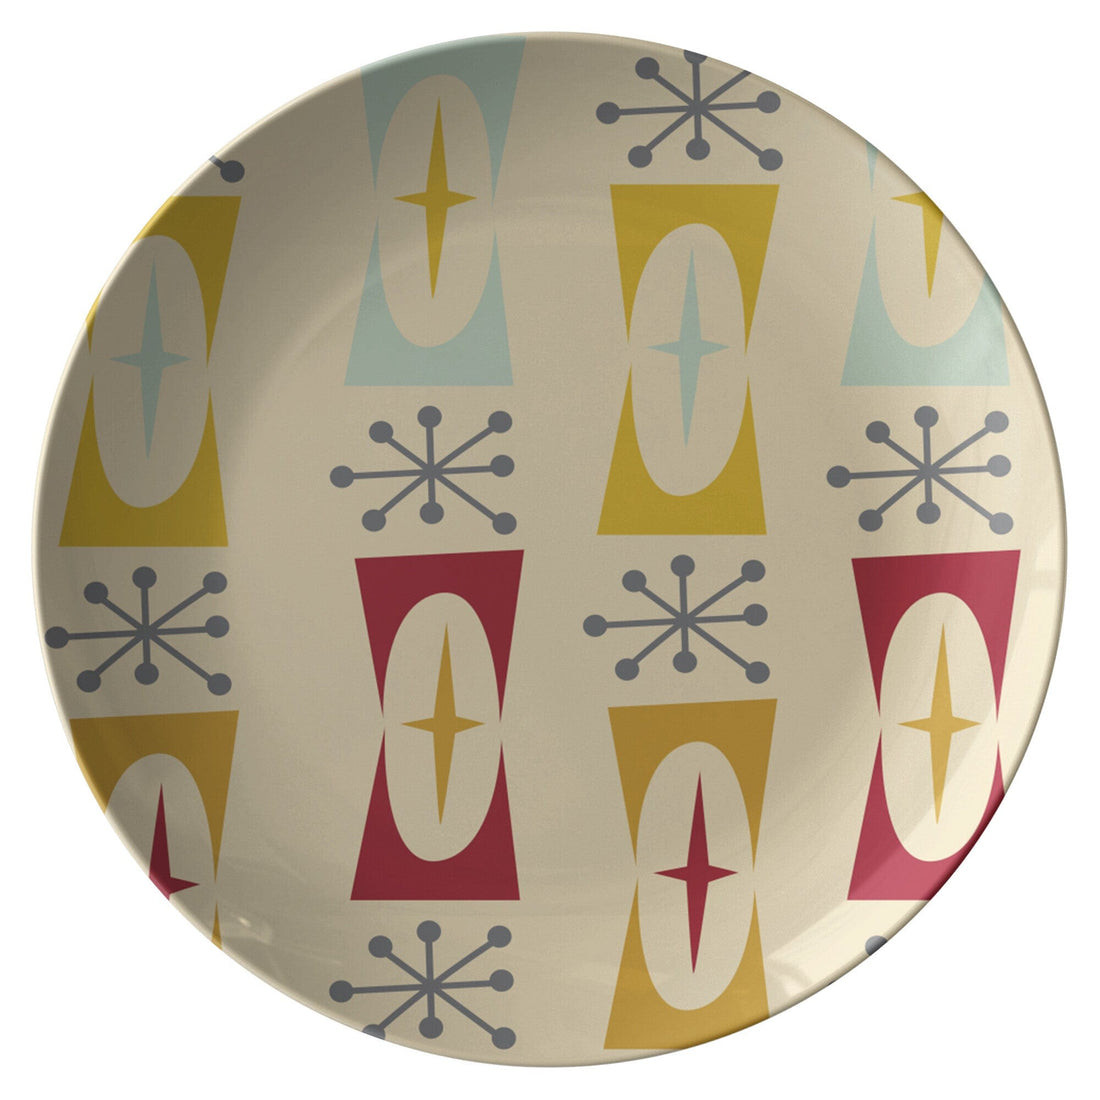 Kate McEnroe New York Dinner Plate in Mid Century Modern Geometric PrintPlatesP20 - GEO - YEL - 19S